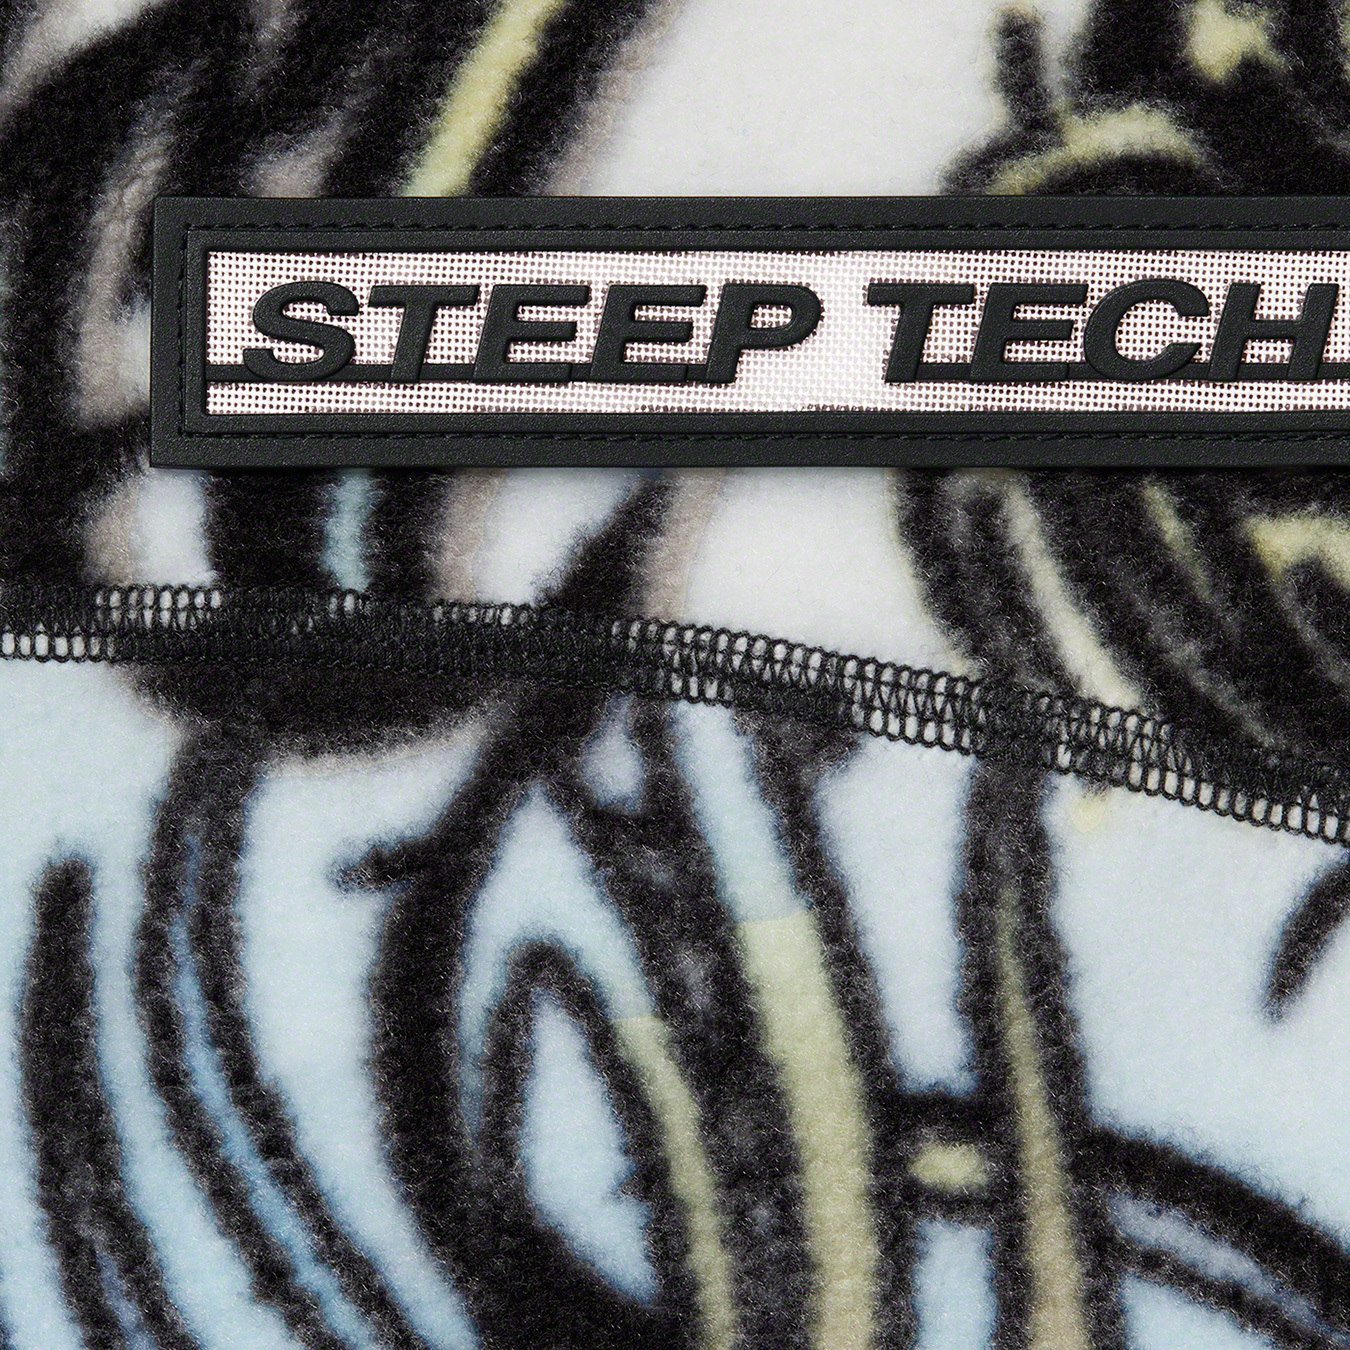 Supreme®/The North Face® Steep Tech Fleece Pant | Supreme 22fw